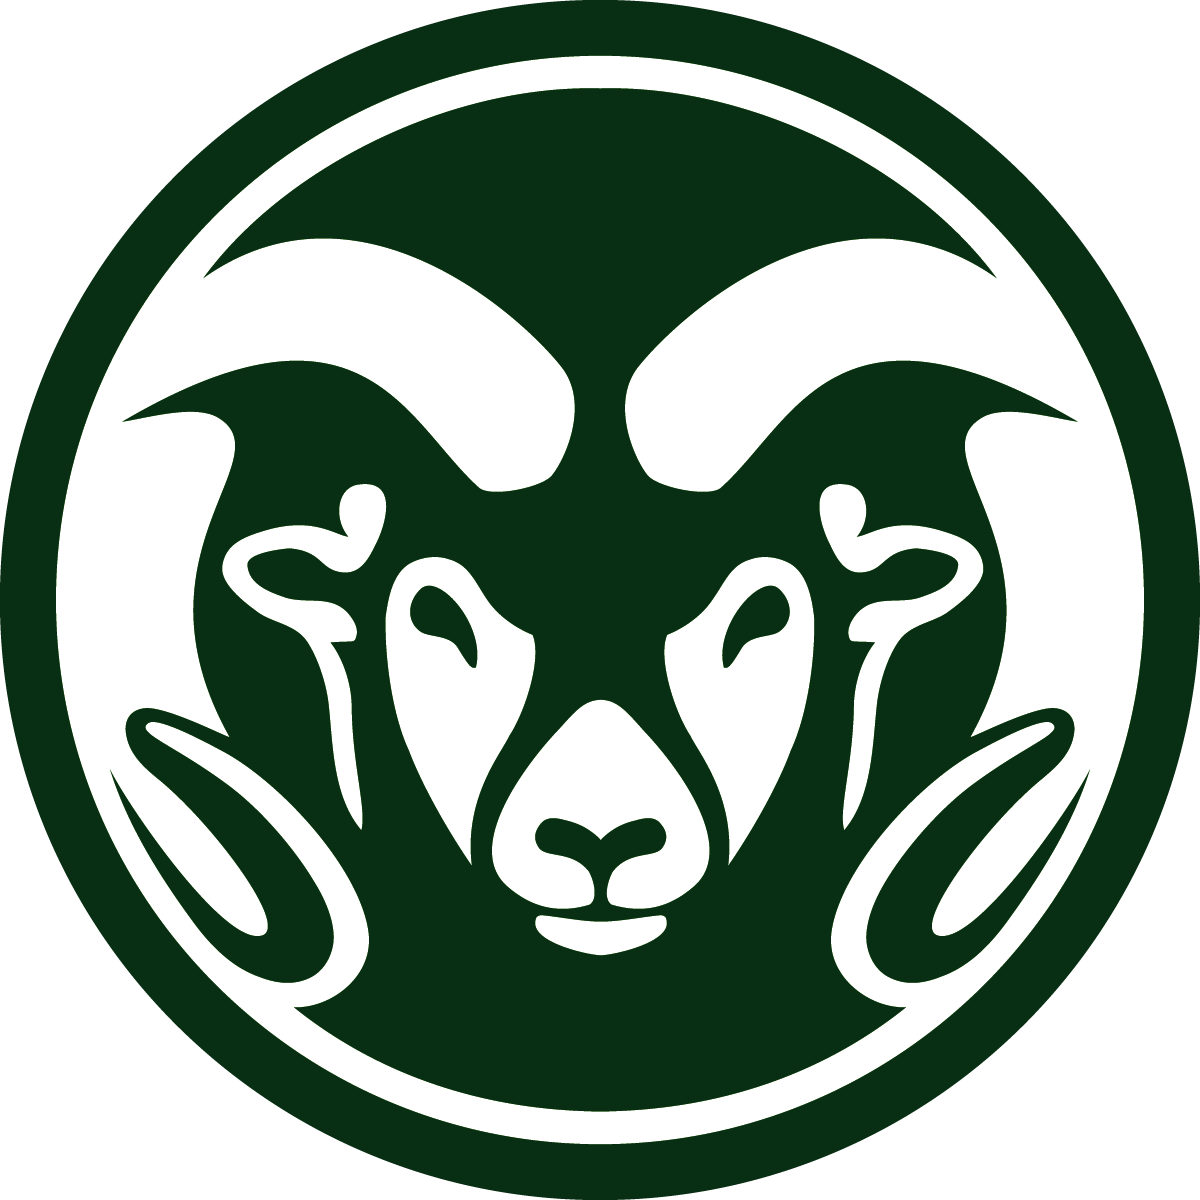 CSU Logo [Colorado State University] png